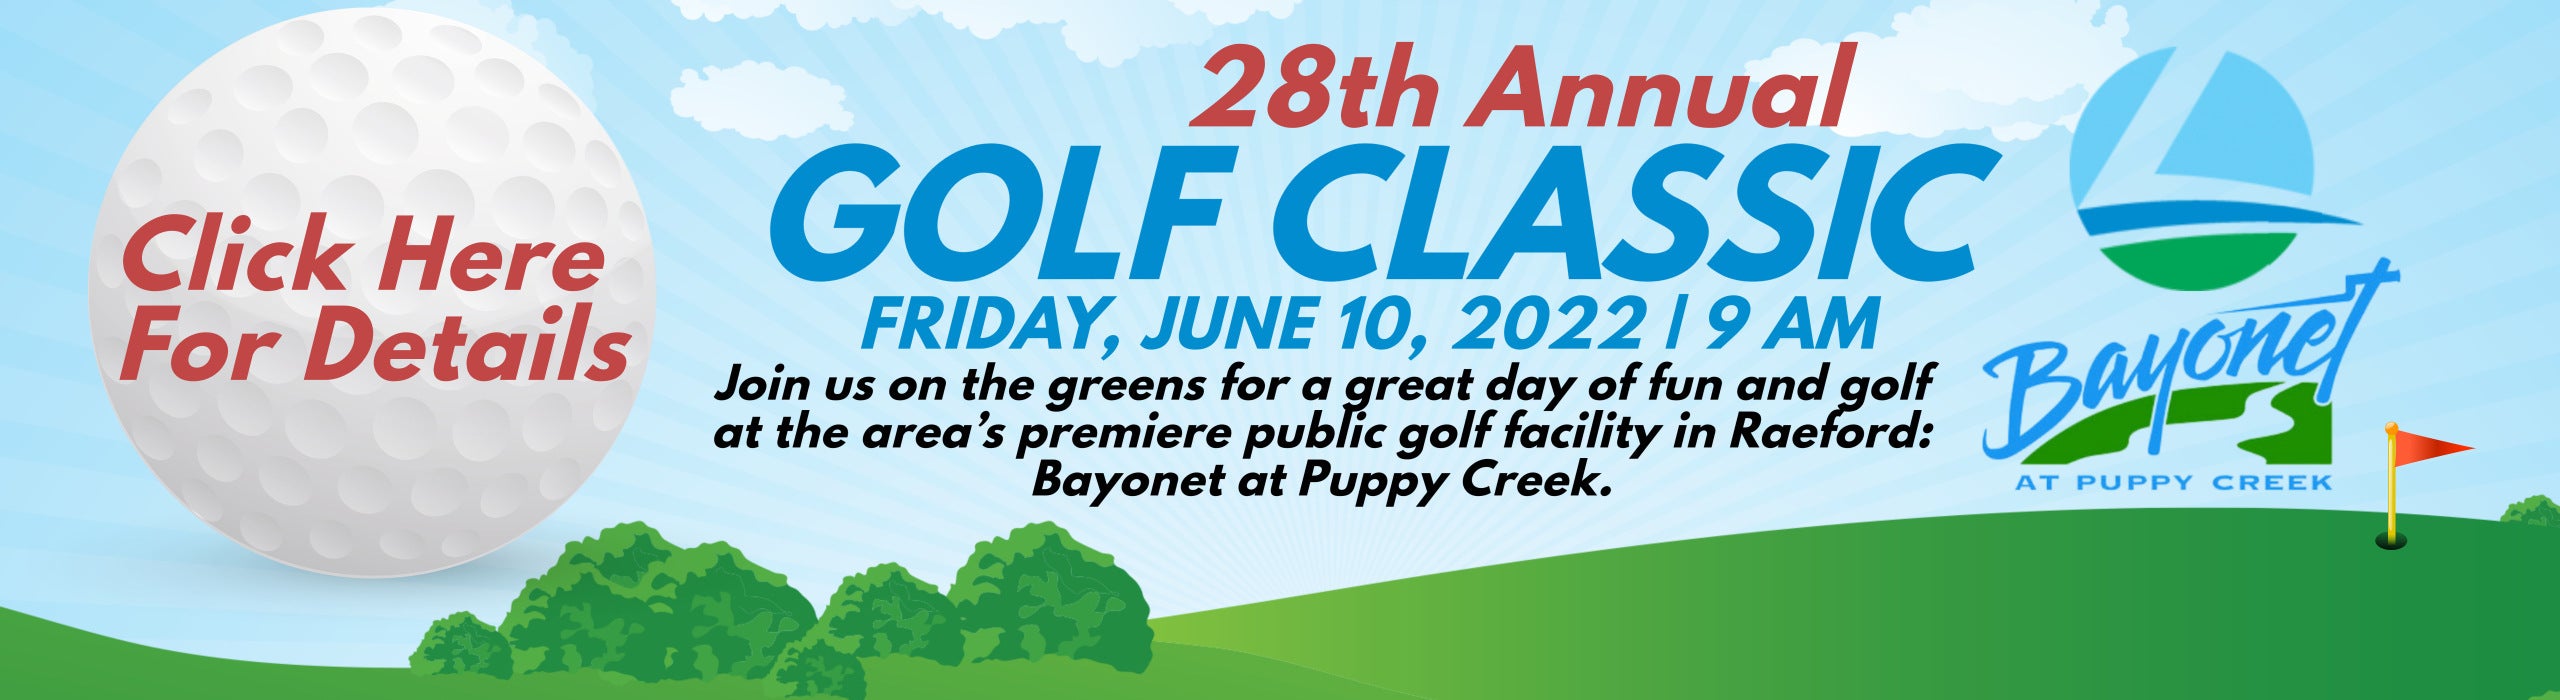 28th Annual Golf Classic